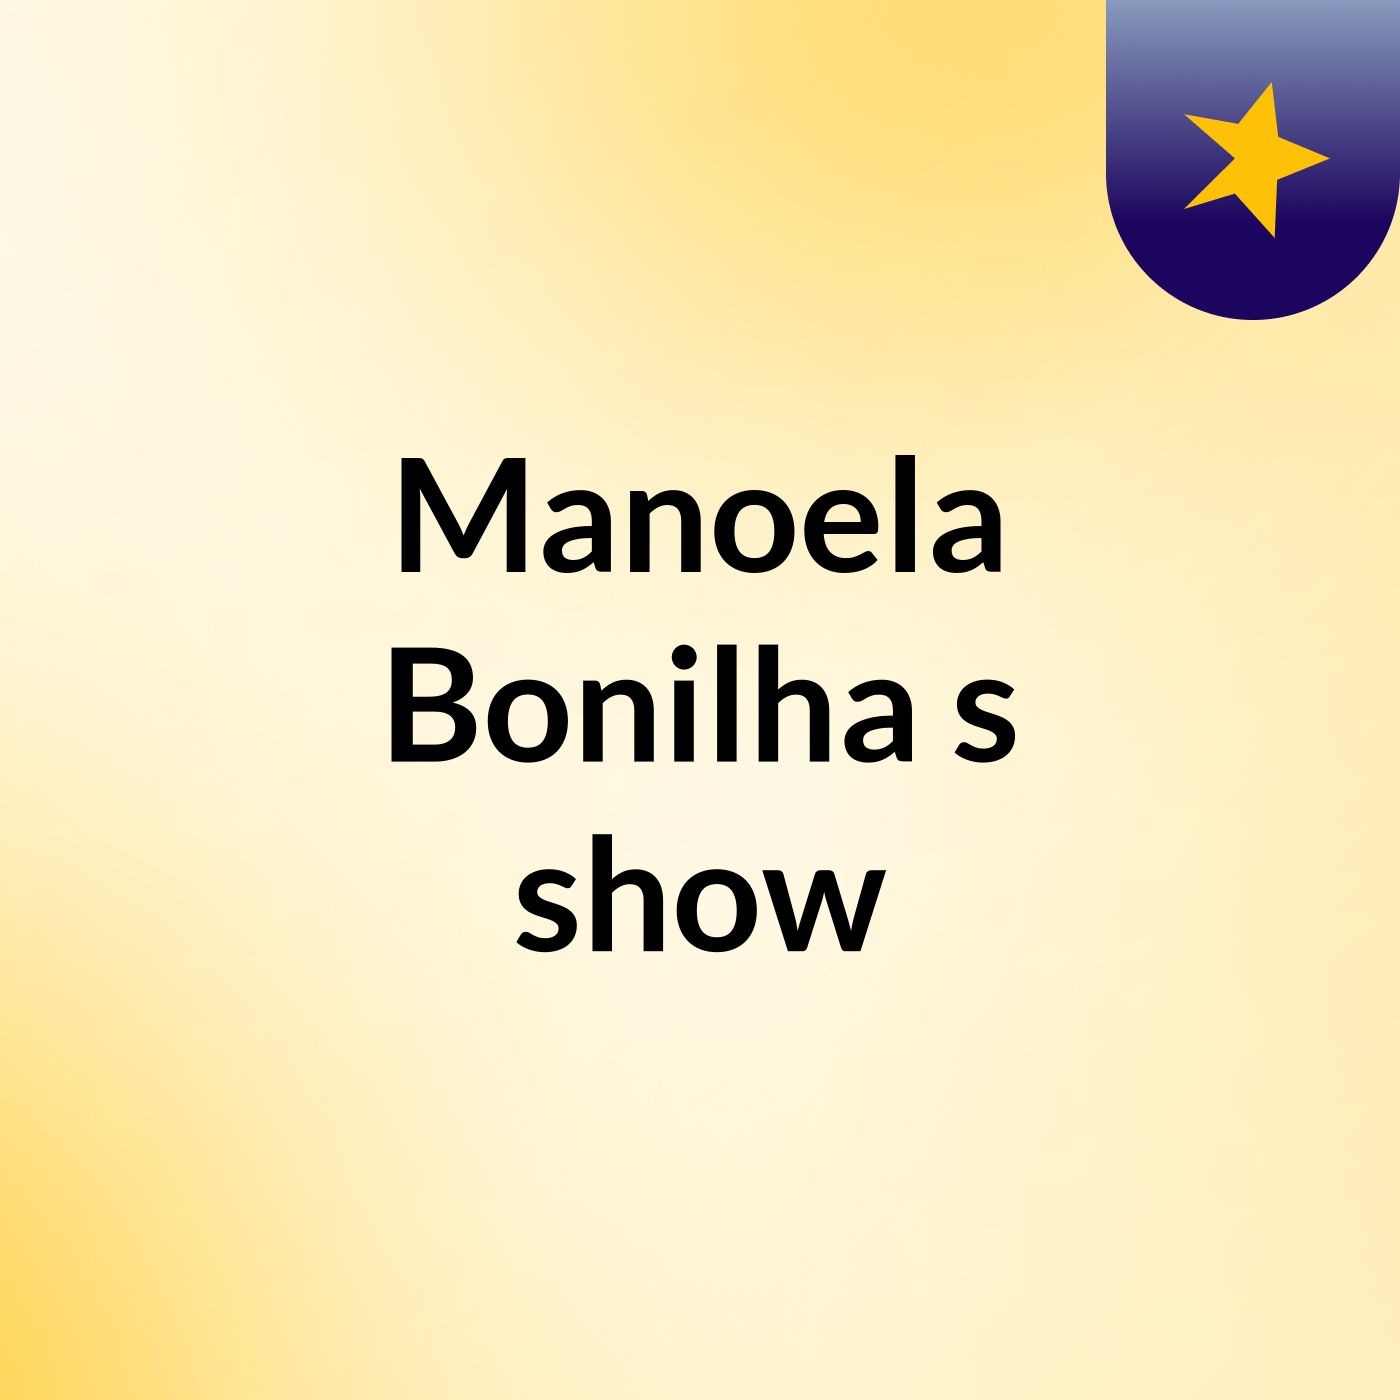 Manoela Bonilha's show